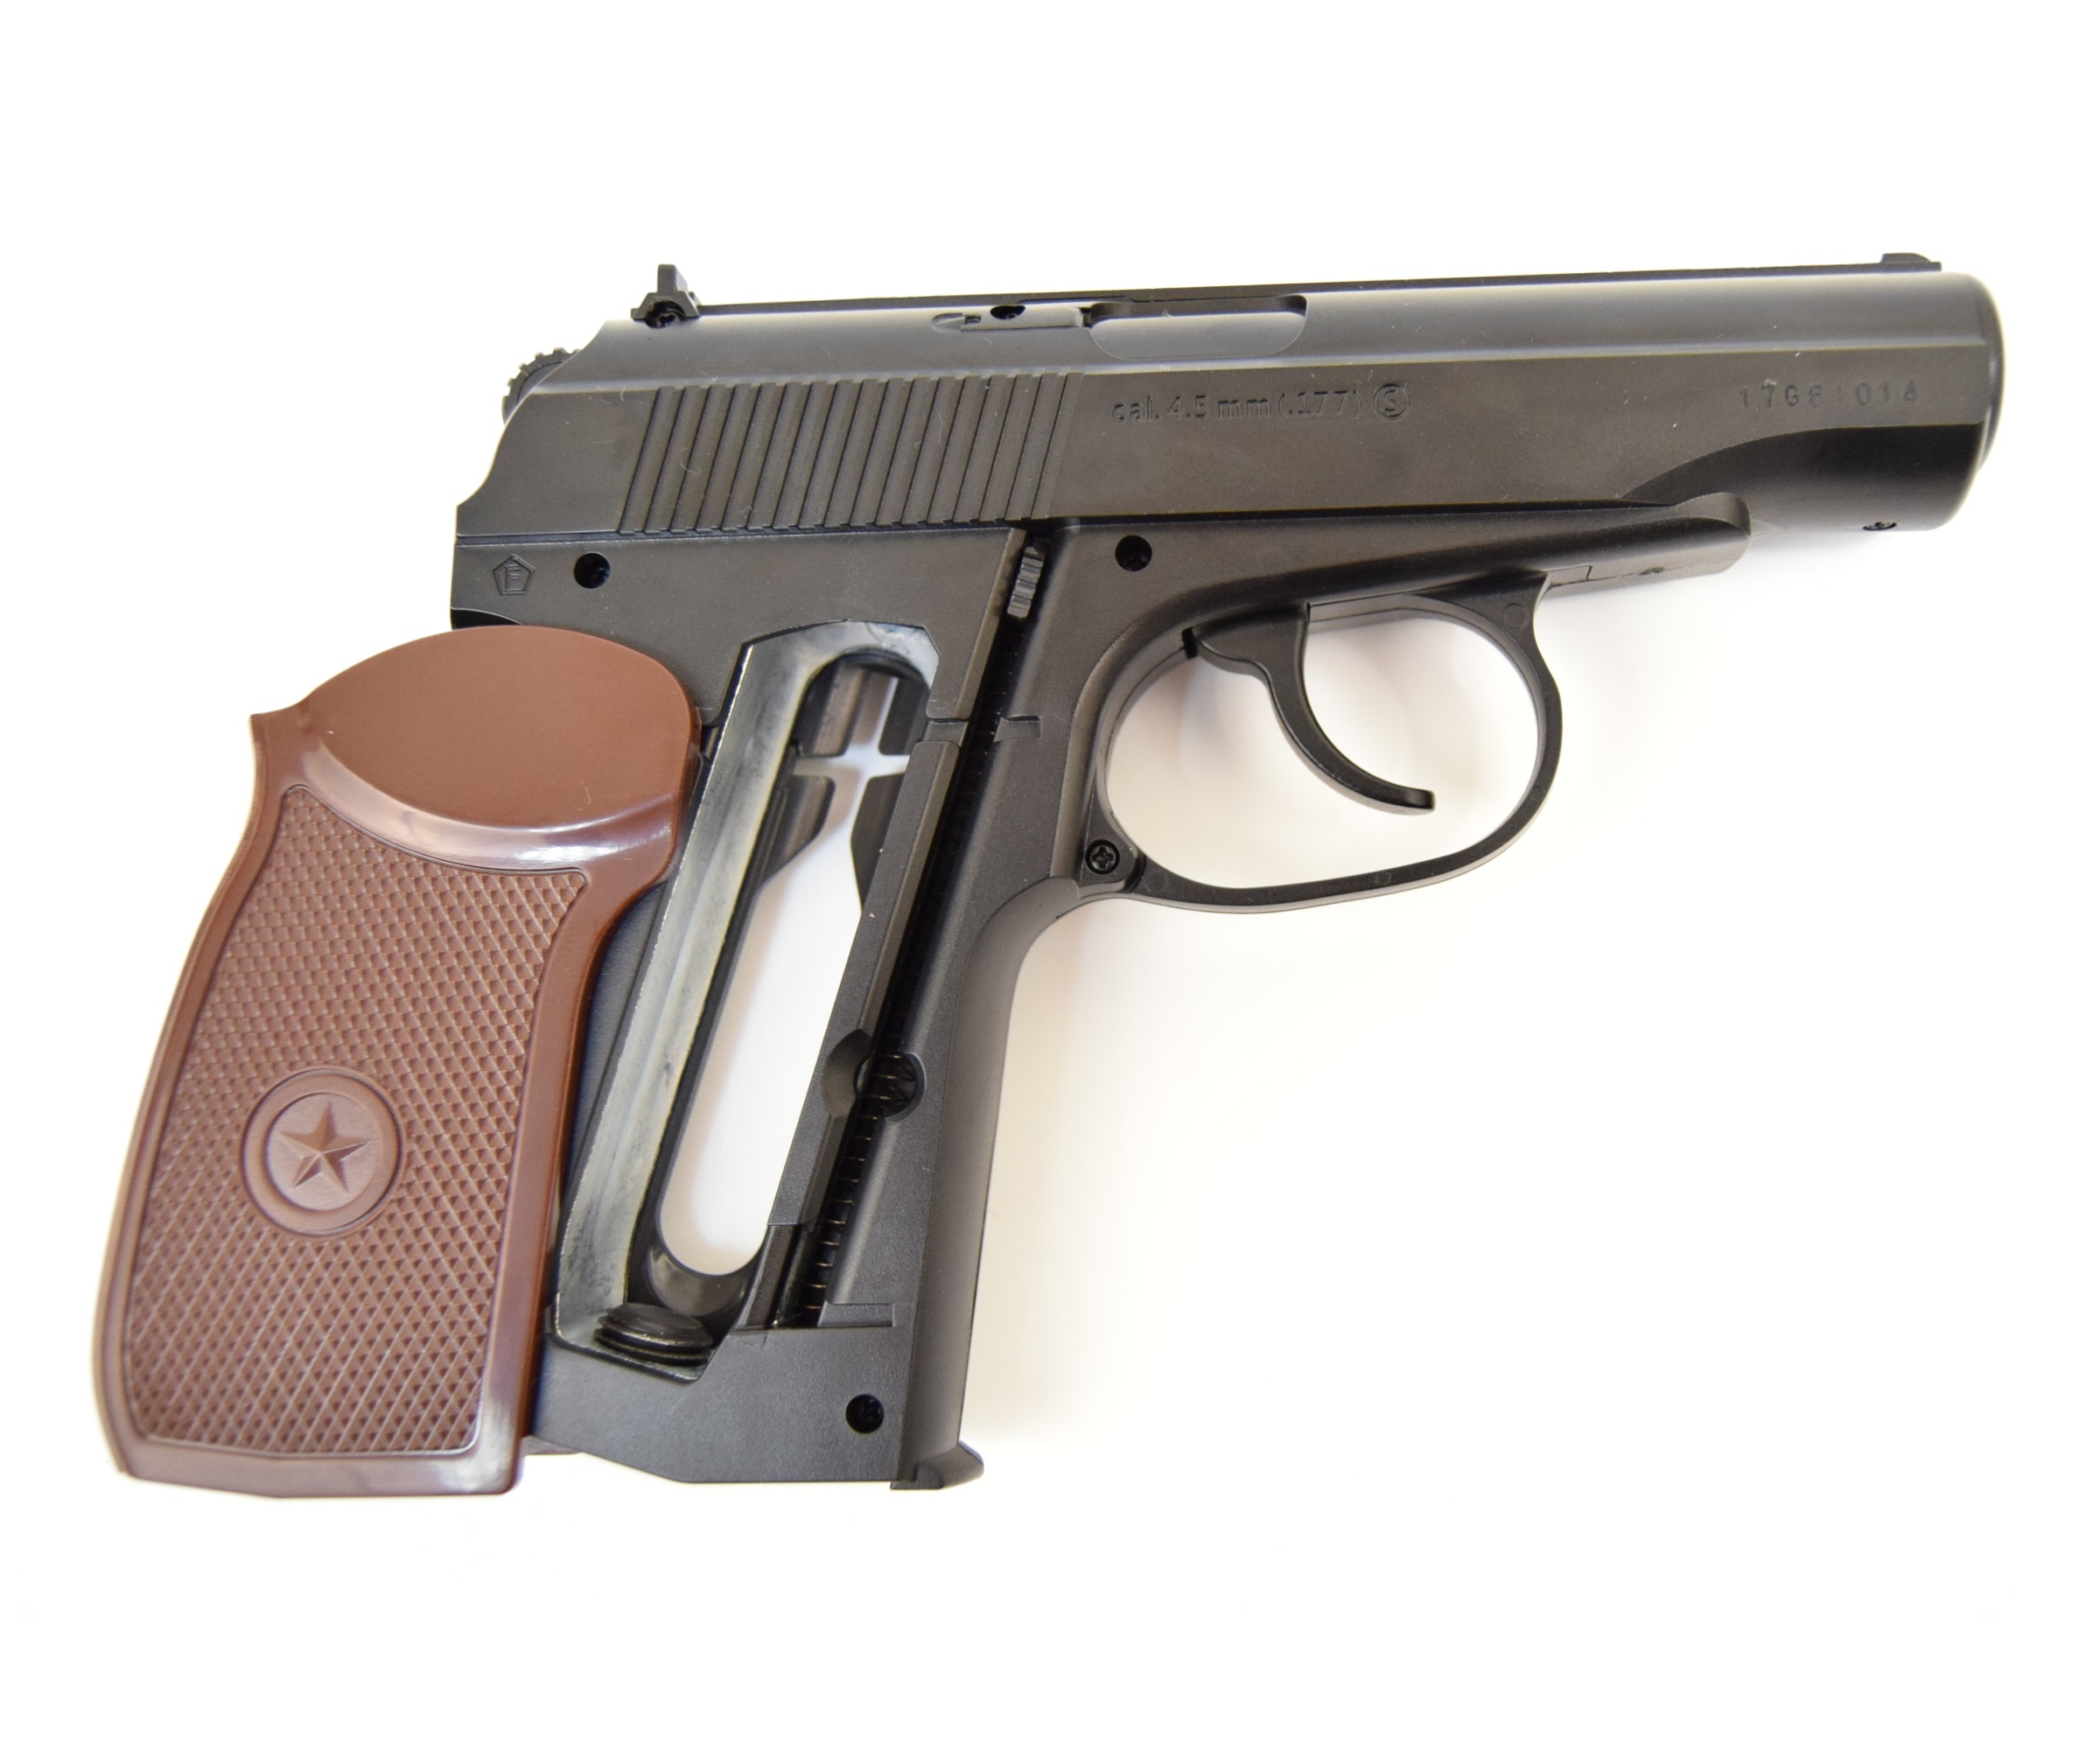 Пневматический пистолет Borner PM-X (ПМ), калибр 4,5 мм